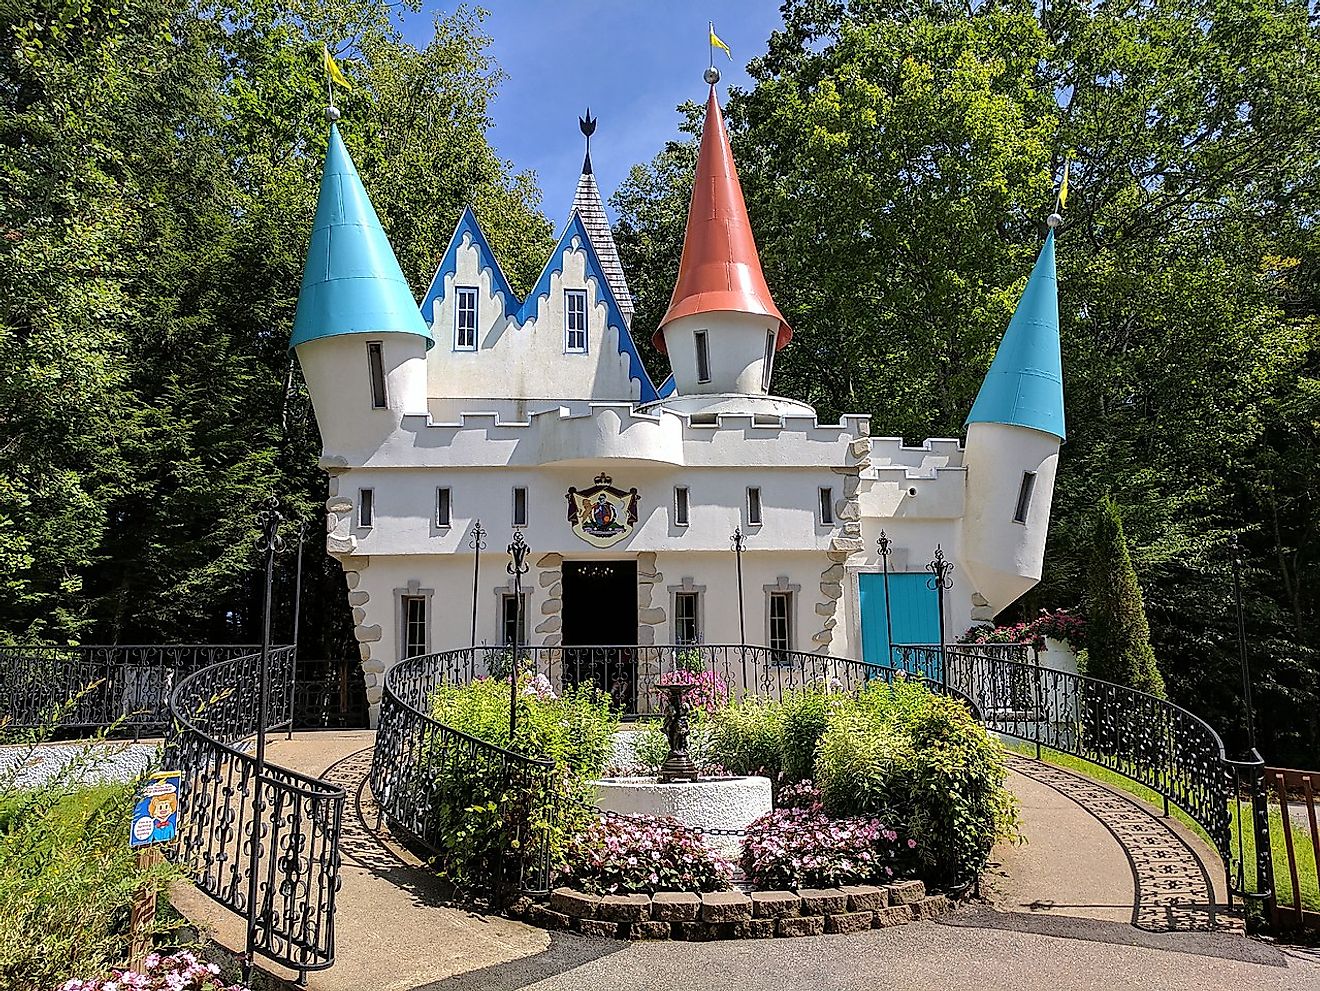 Cinderella's Castle, Story Land theme park in Glen. Image credit: Wikimedia.org